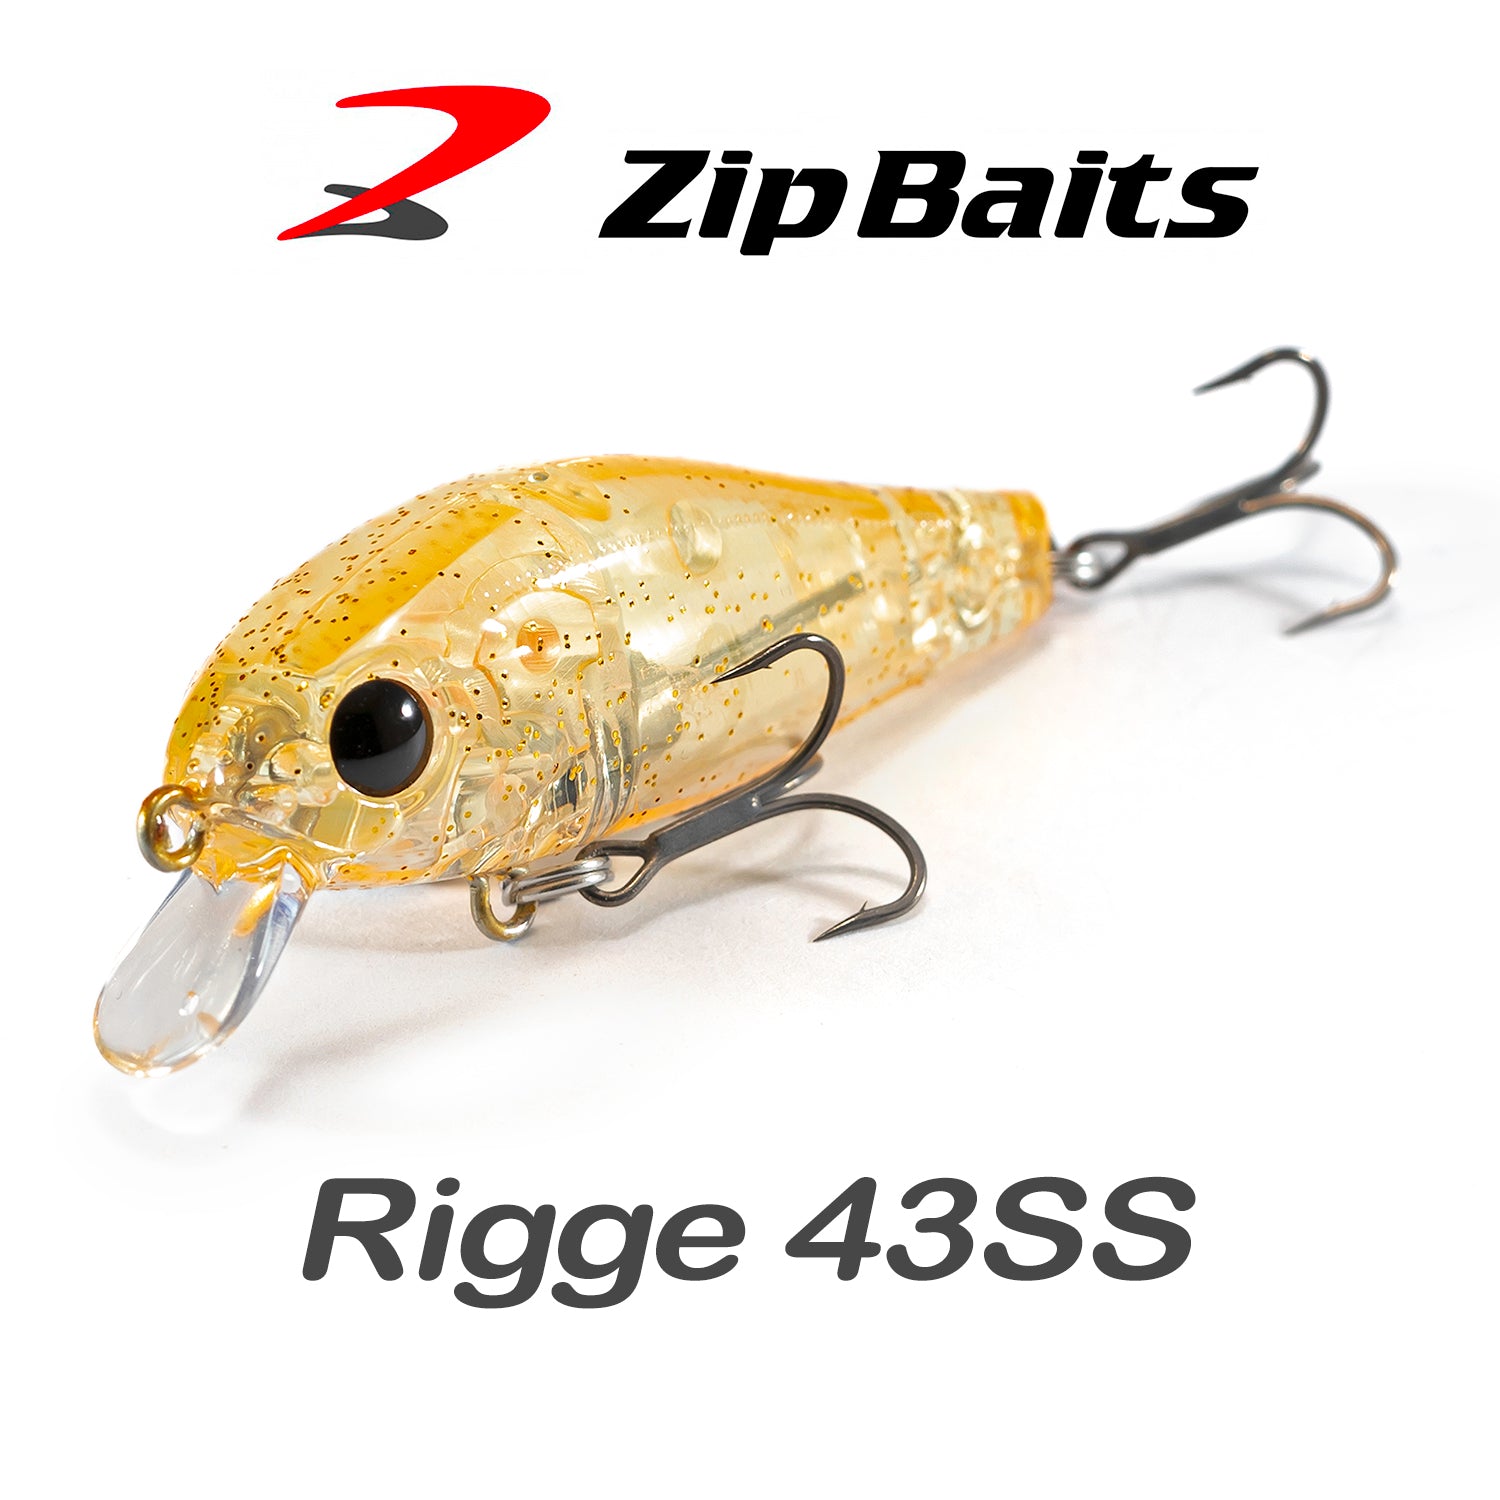  ZipBaits Rigge 43SP, Lenght mm 43 995, Suspending Fishing  Wobbler : Sports & Outdoors